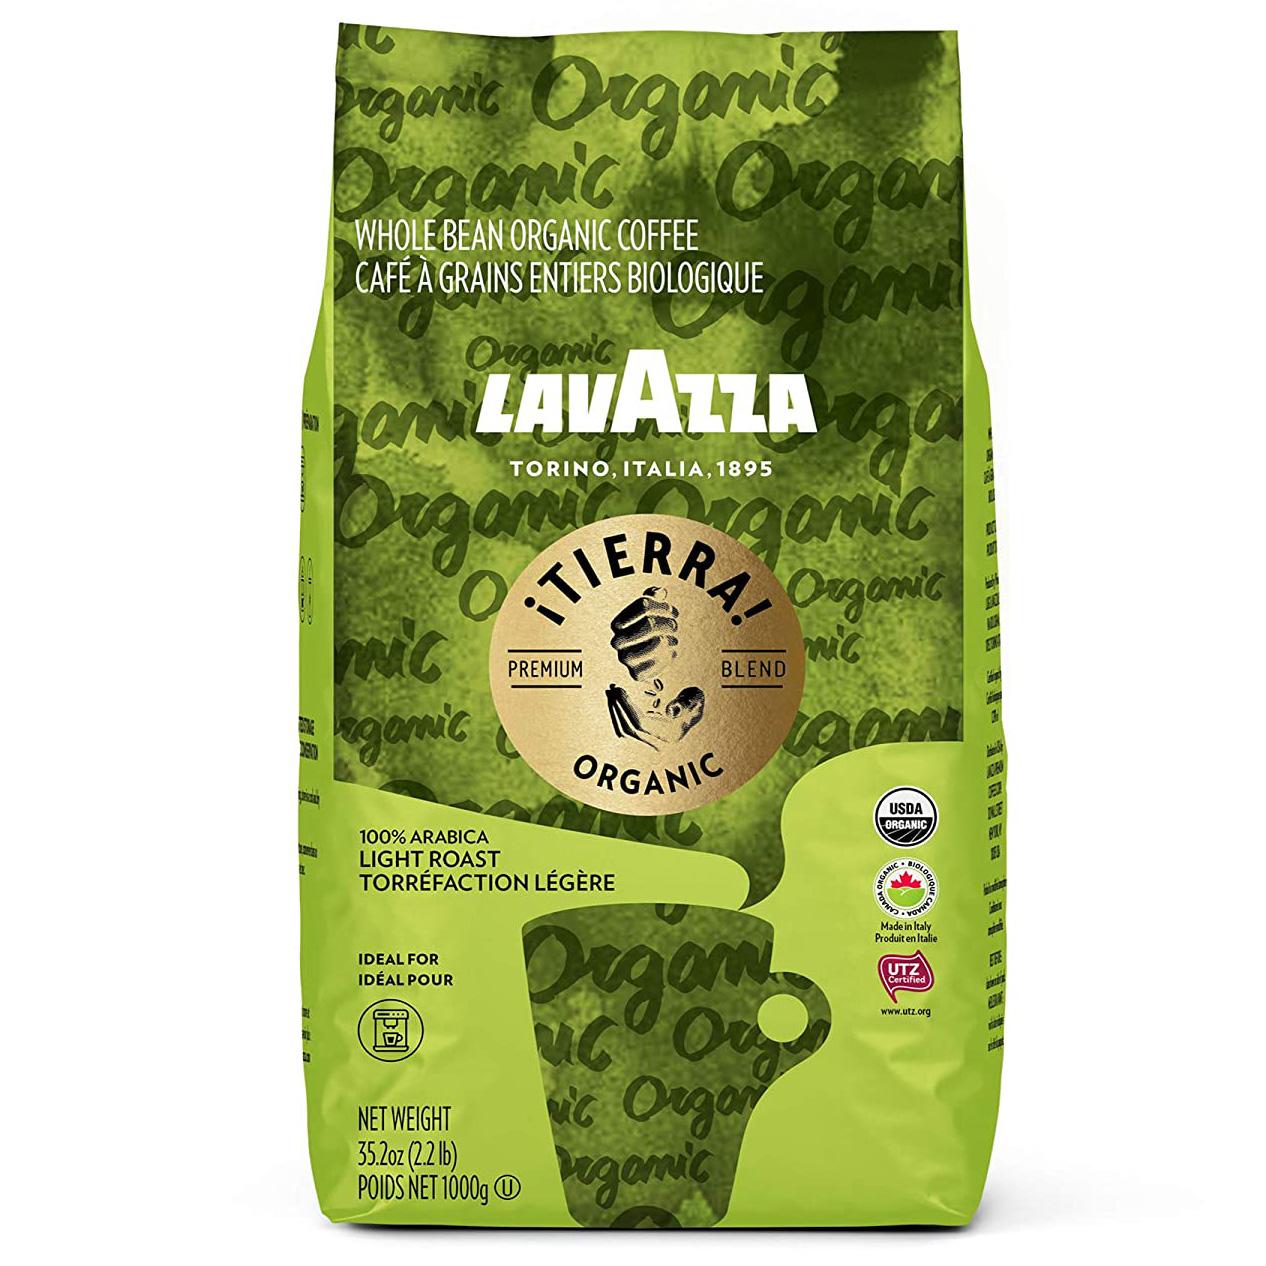 35.2oz Lavazza Organic Tierra Whole Bean Coffee for $12.41 Shipped